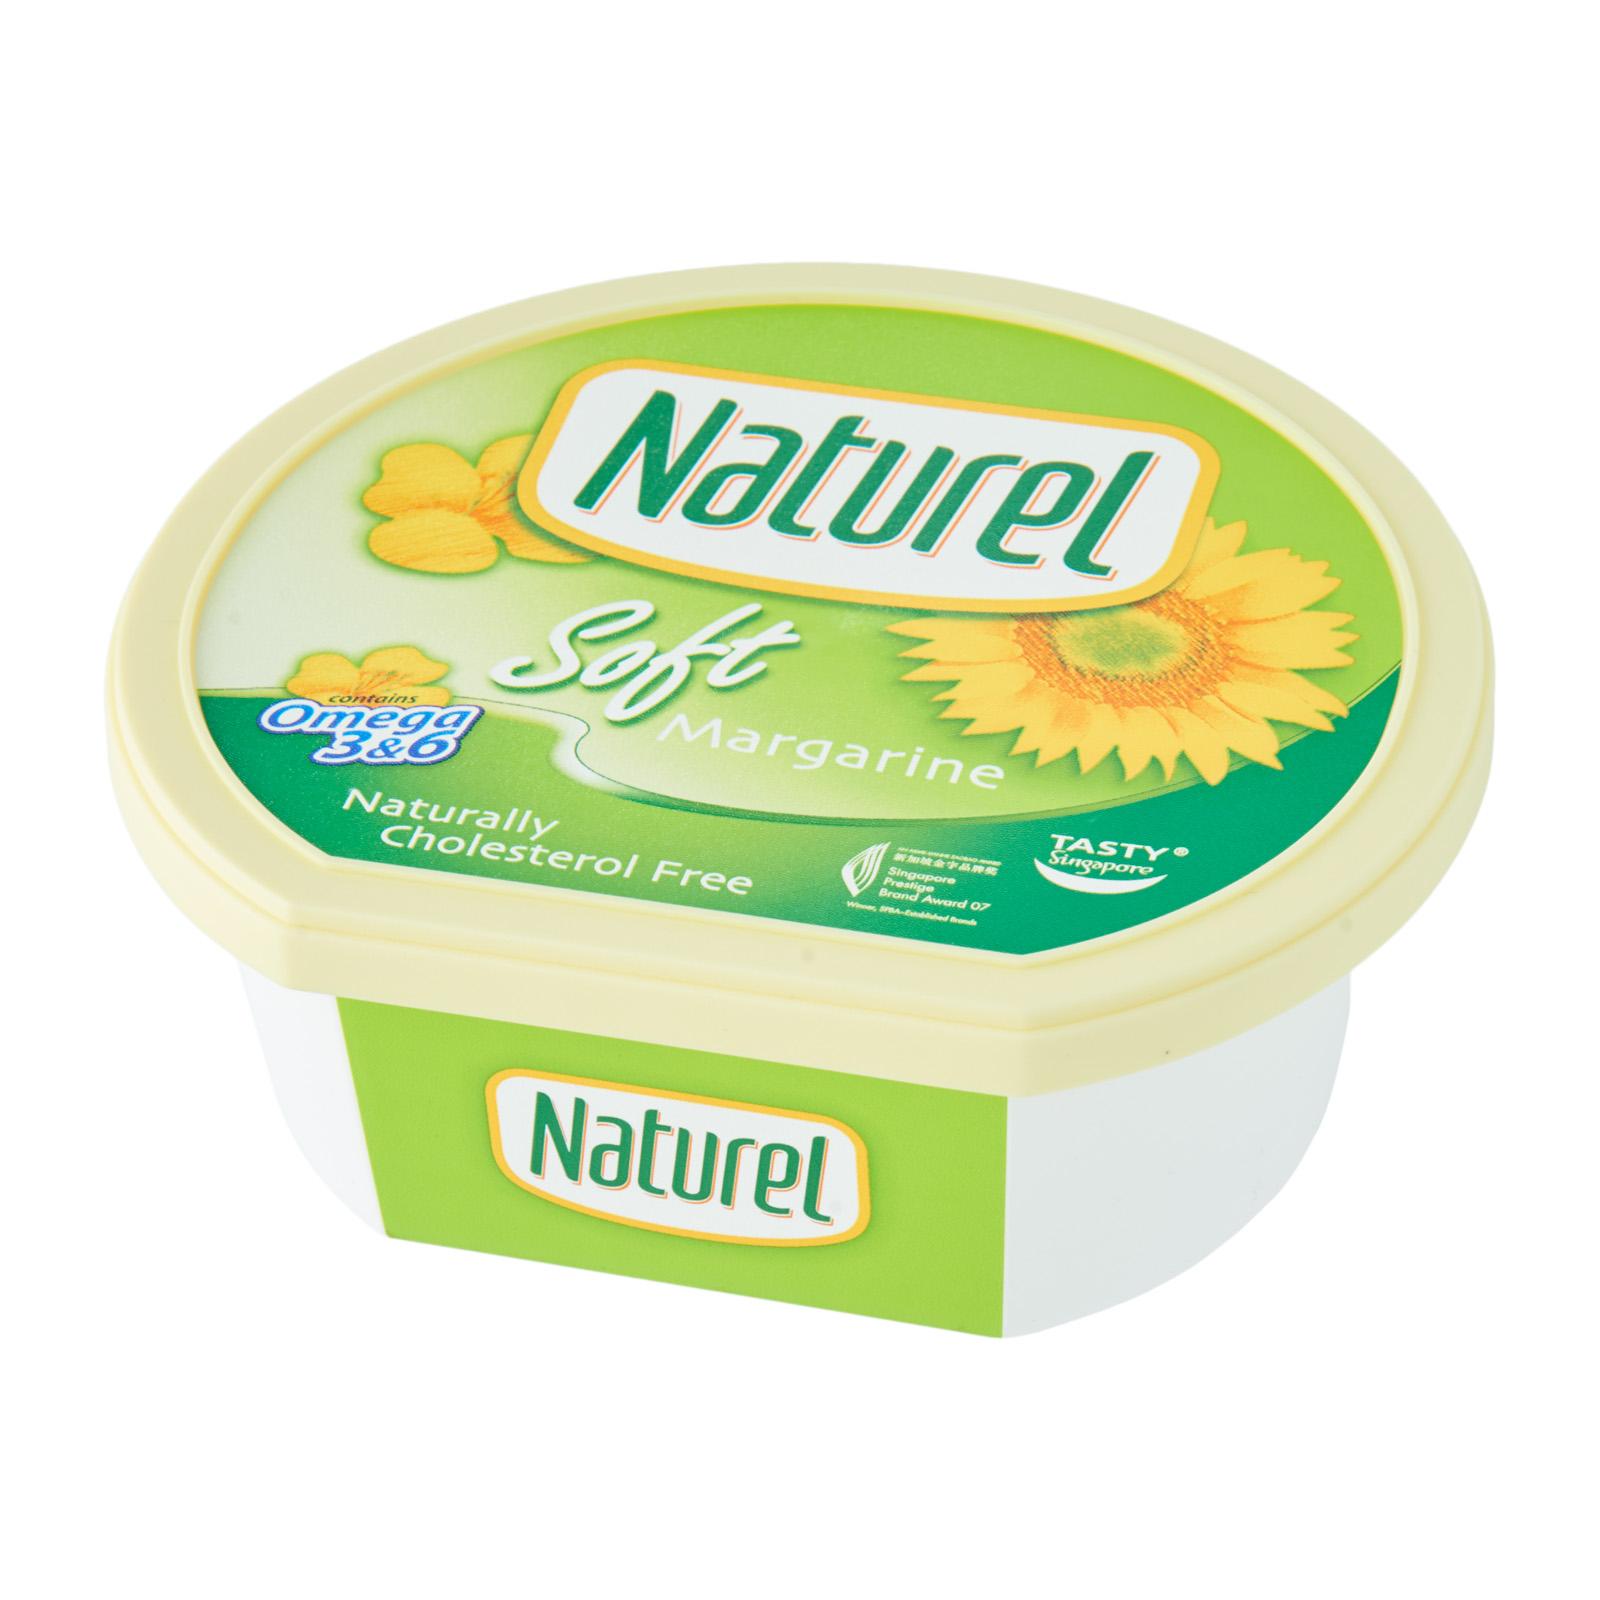 Soft Margarine